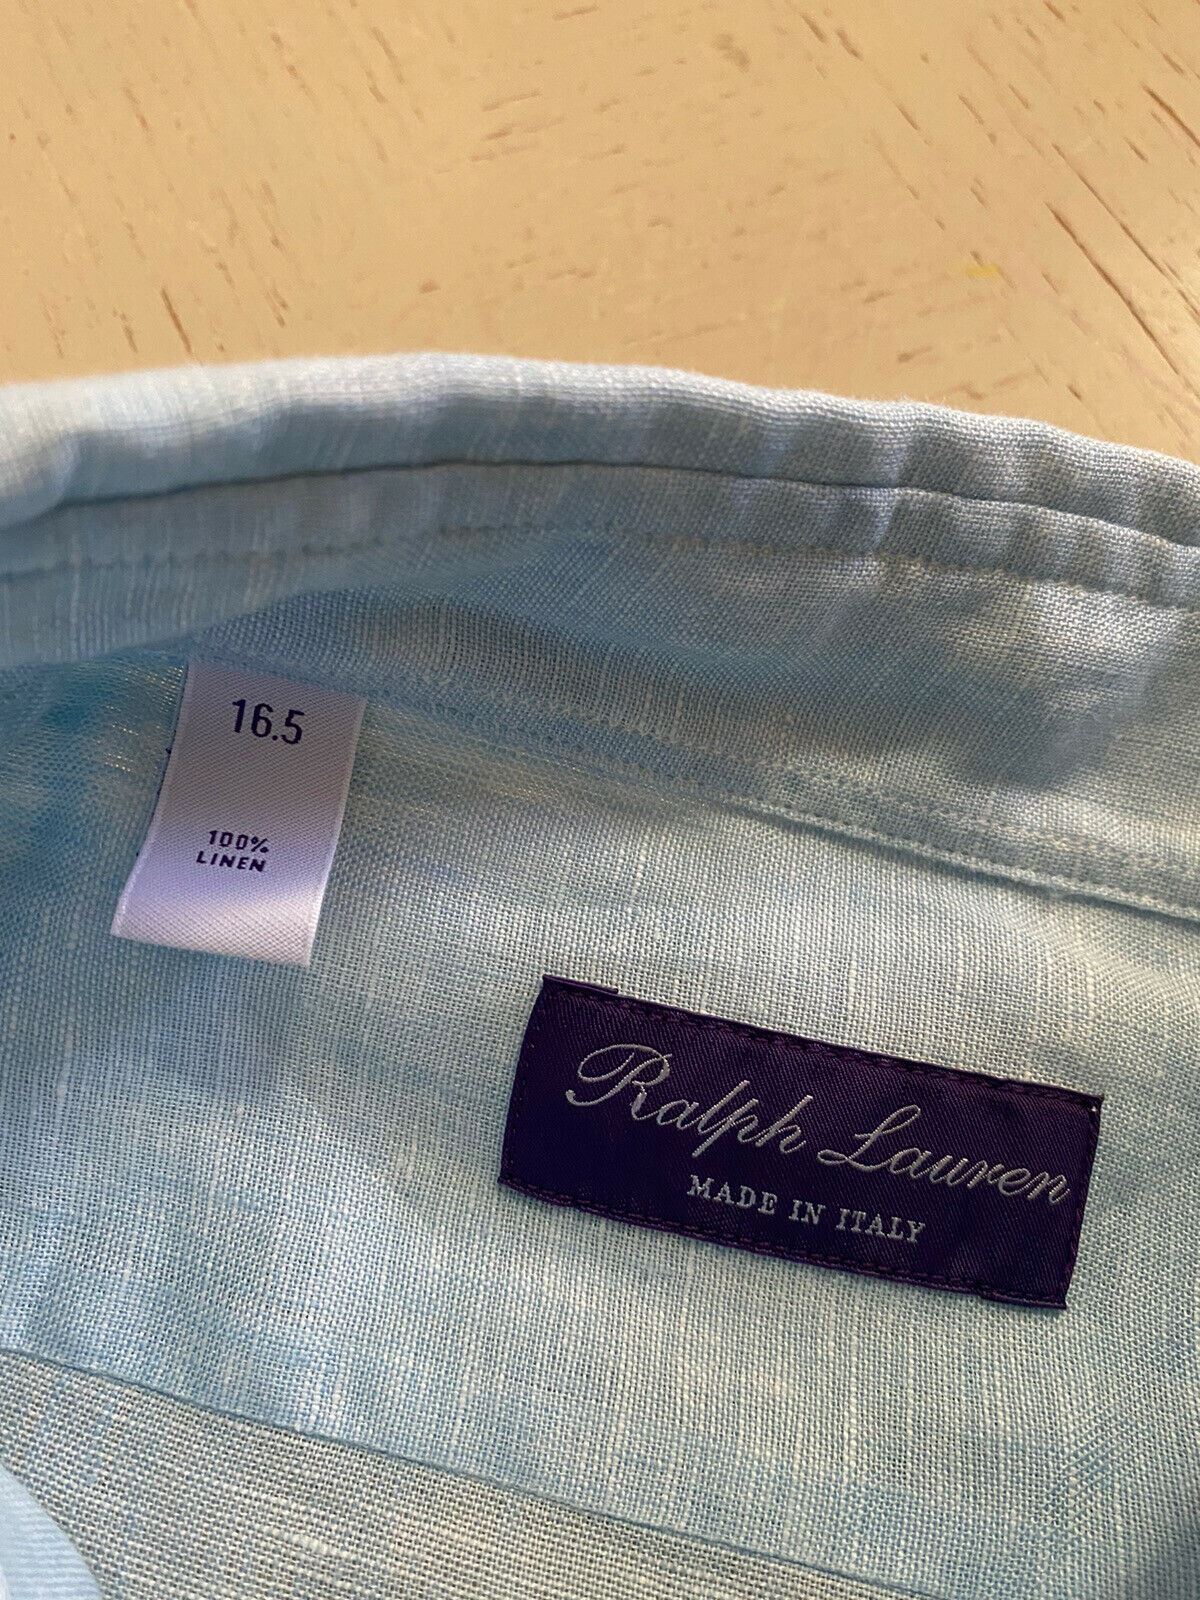 Neu mit Etikett: 450 $ Ralph Lauren Purple Label Herren Leinenhemd Blau 42/16,5 Italien